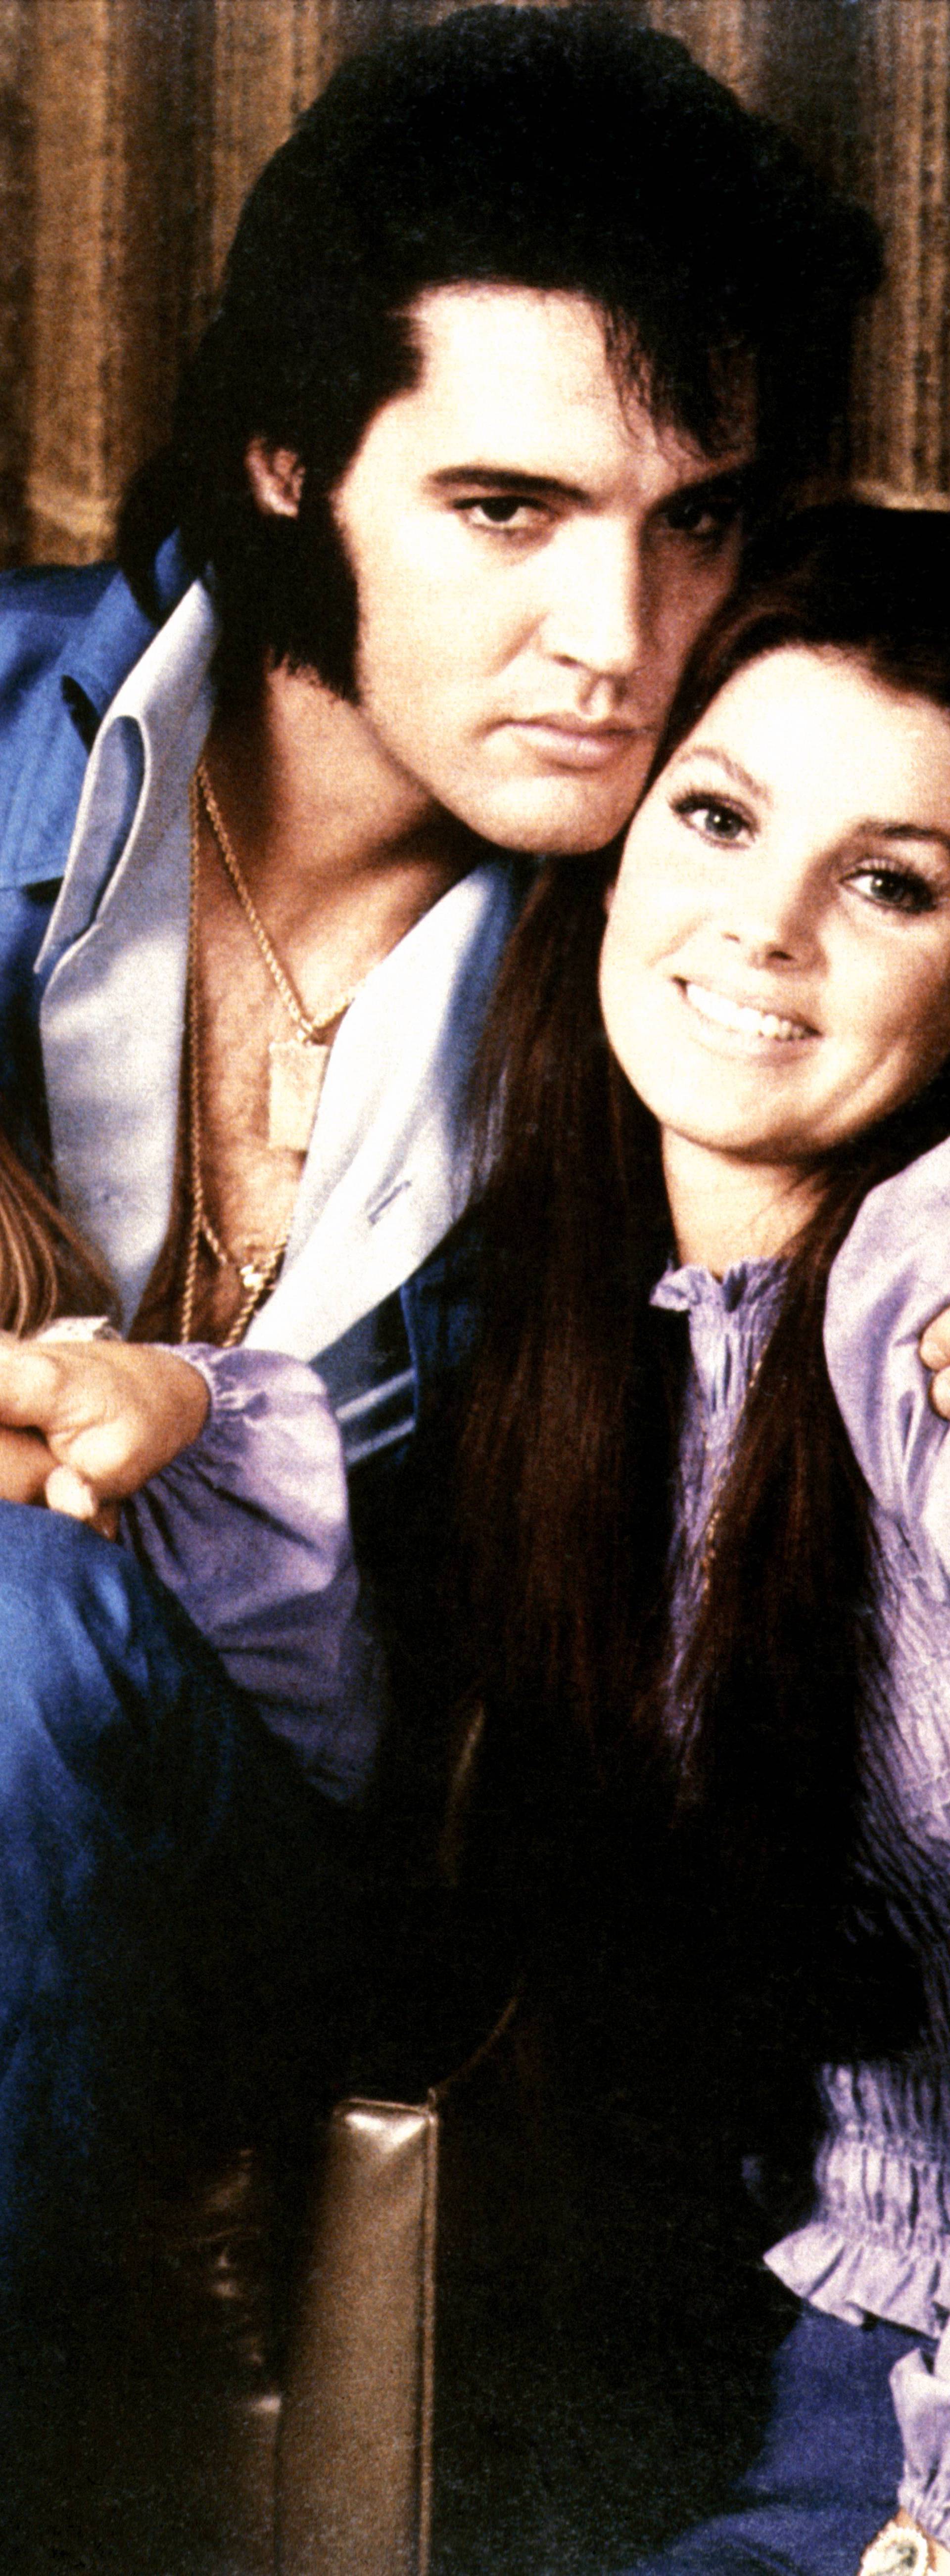 Udovica kralja rock'n'rolla: Elvis je bio ljubav mog života, ali mi je njegov životni stil bio težak